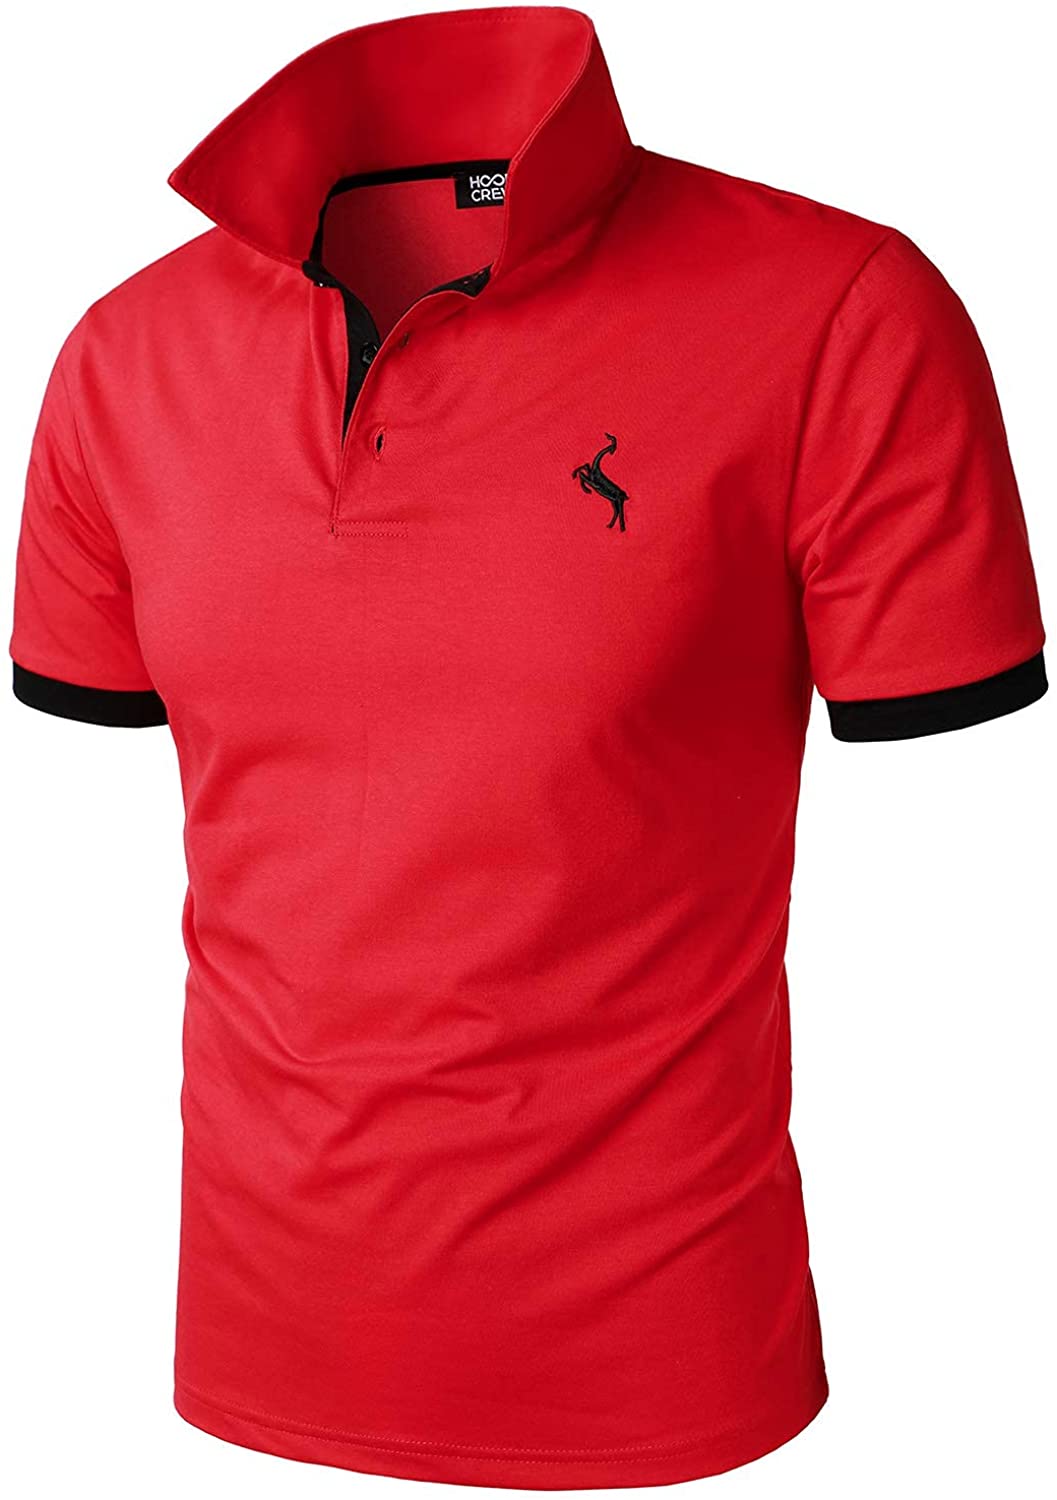 HOOD CREW Men’s Classic Polo Shirt Short Sleeve Shirts Lightweight Casual Tops 